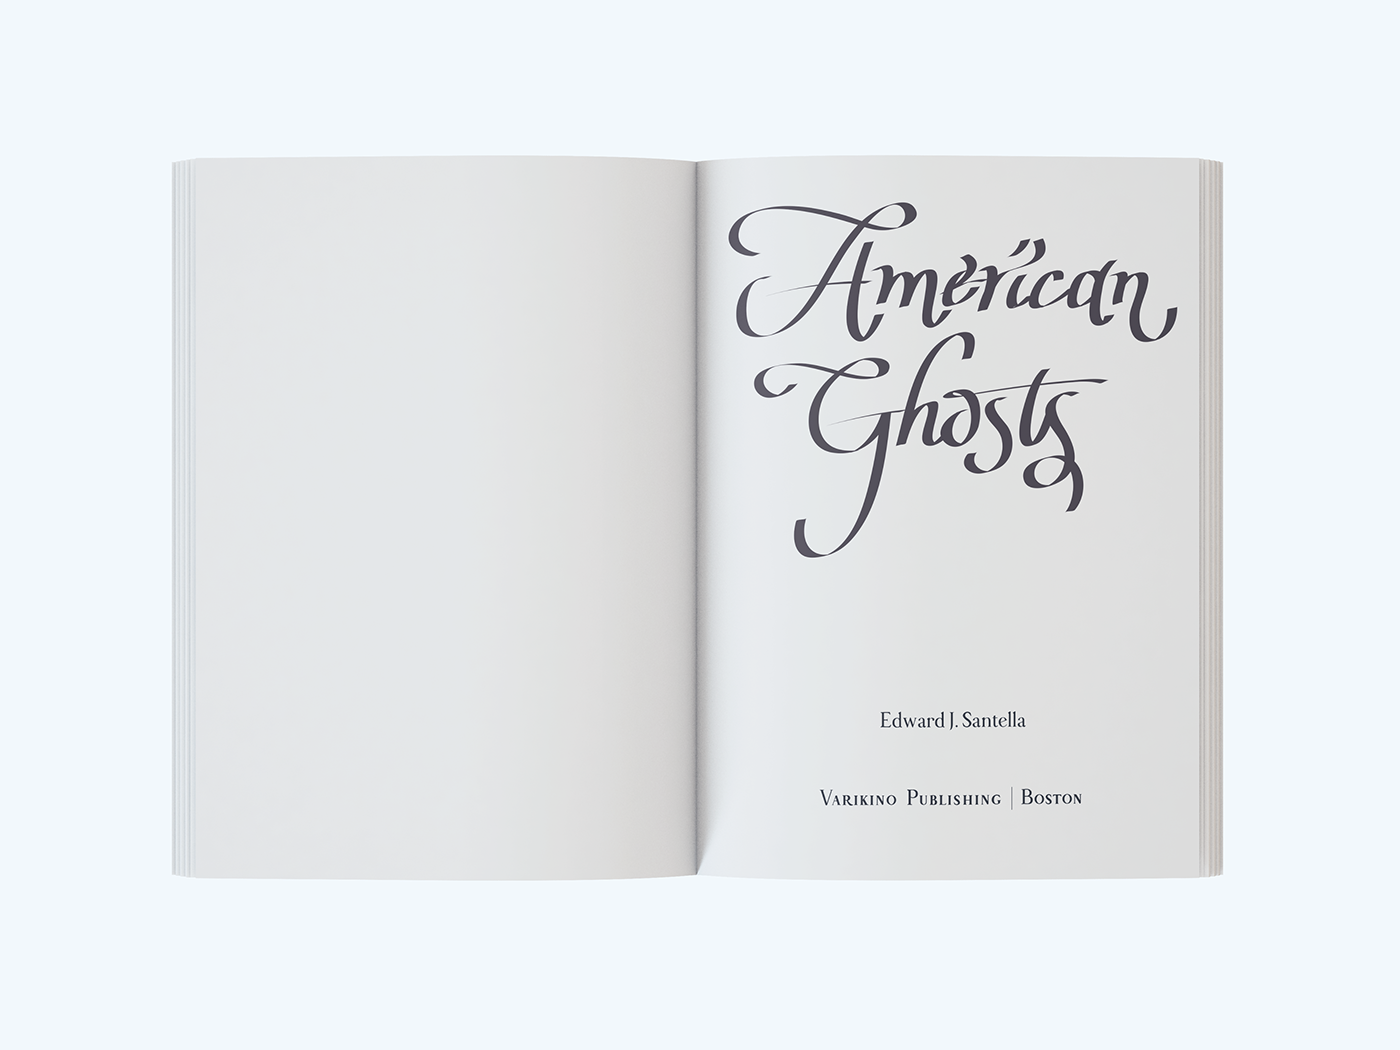 editorial book design american ghosts Edward Santella Type Sailor david espinosa monteros font Varykino Publishing novel lettering